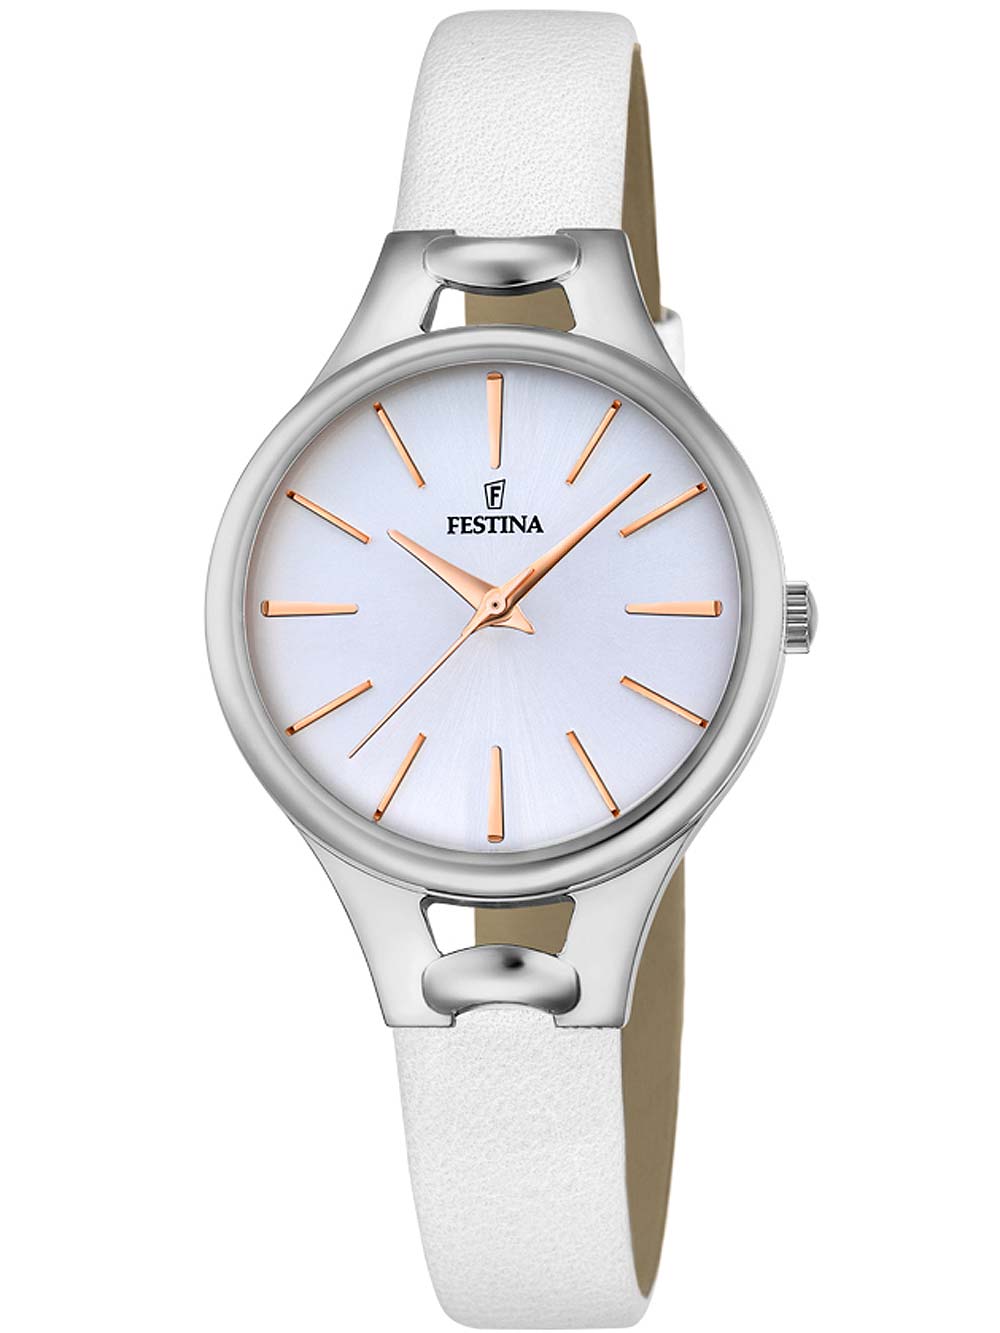 Festina F16954 / 1 Trend Watch 32mm 5ATM